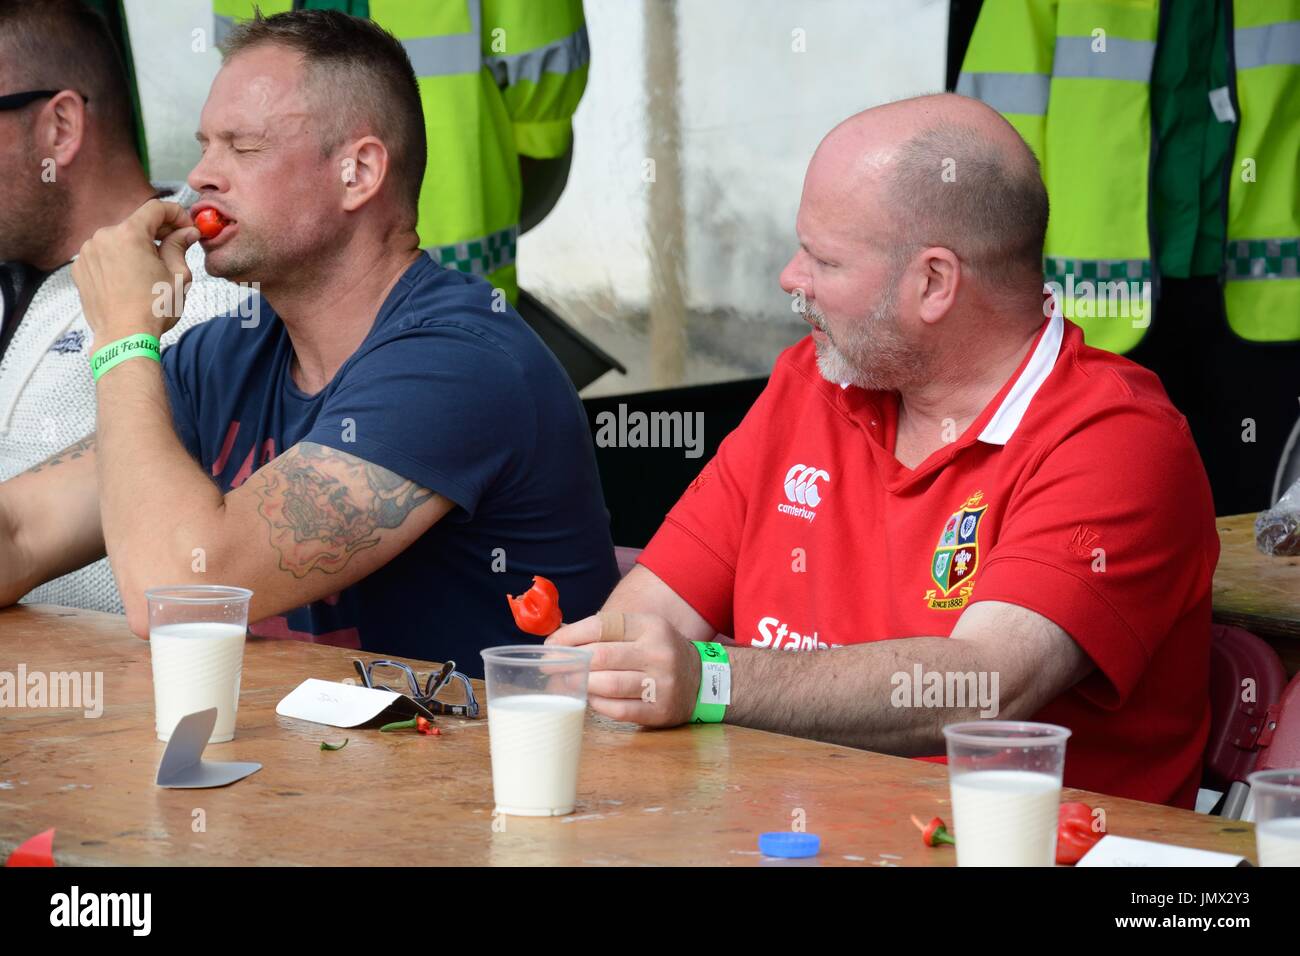 Contestants eating chilli at a chilli festival Gower Chilli Festival Glamorgan Wales Cymru UK GB Stock Photo